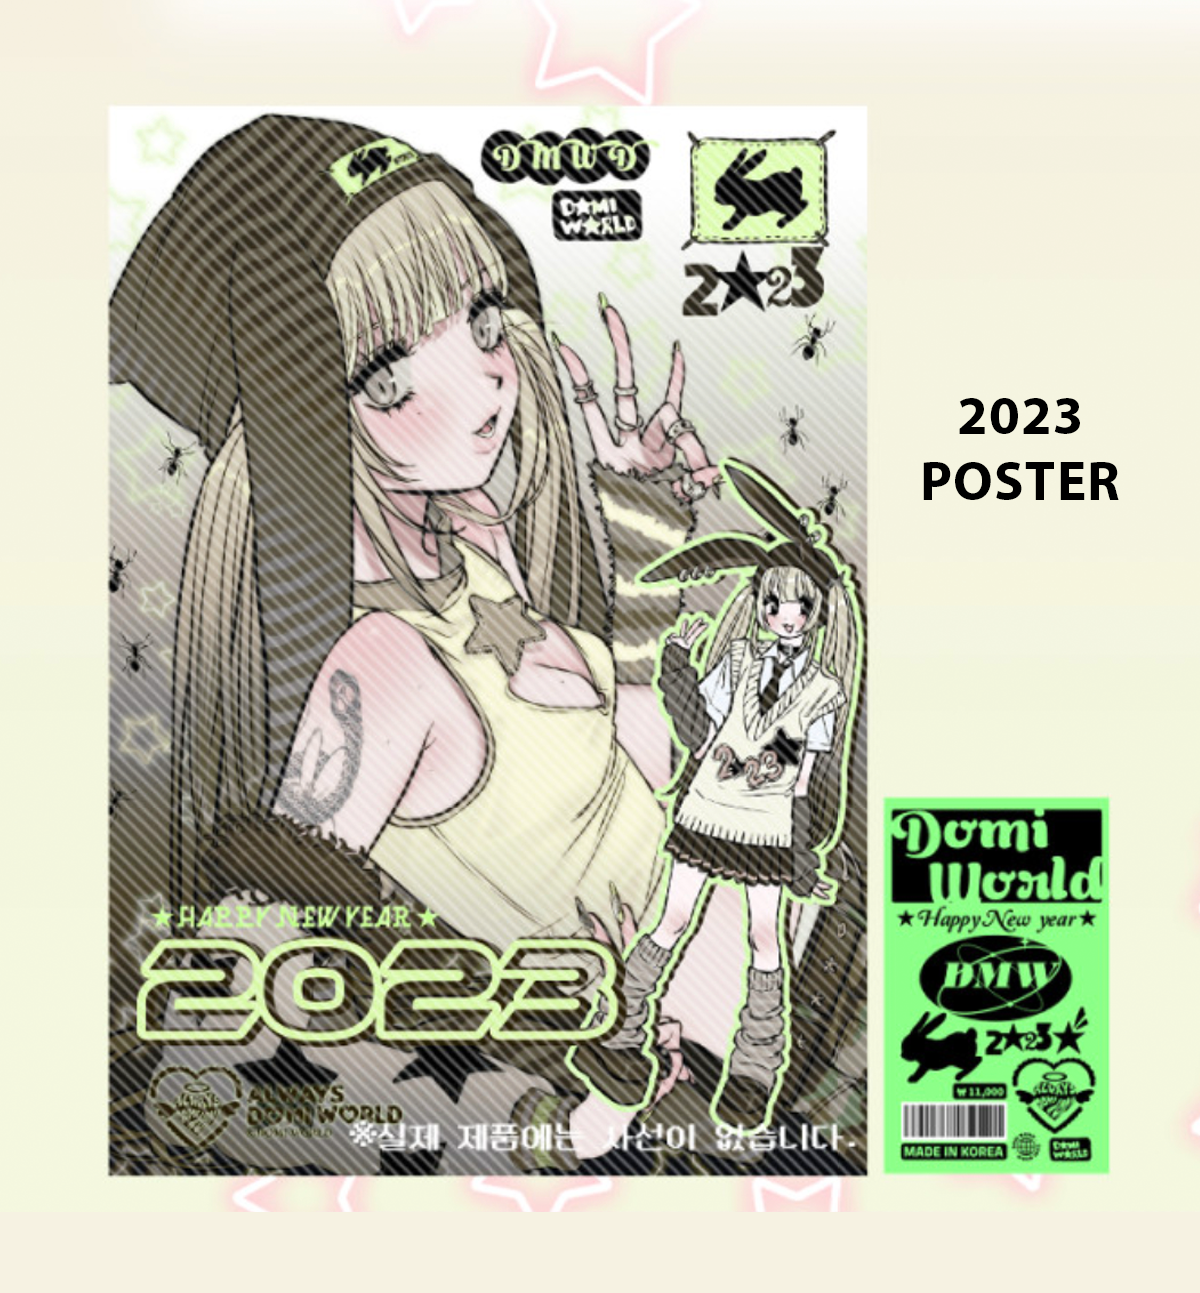 A3 Domi World Posters [2 Designs]